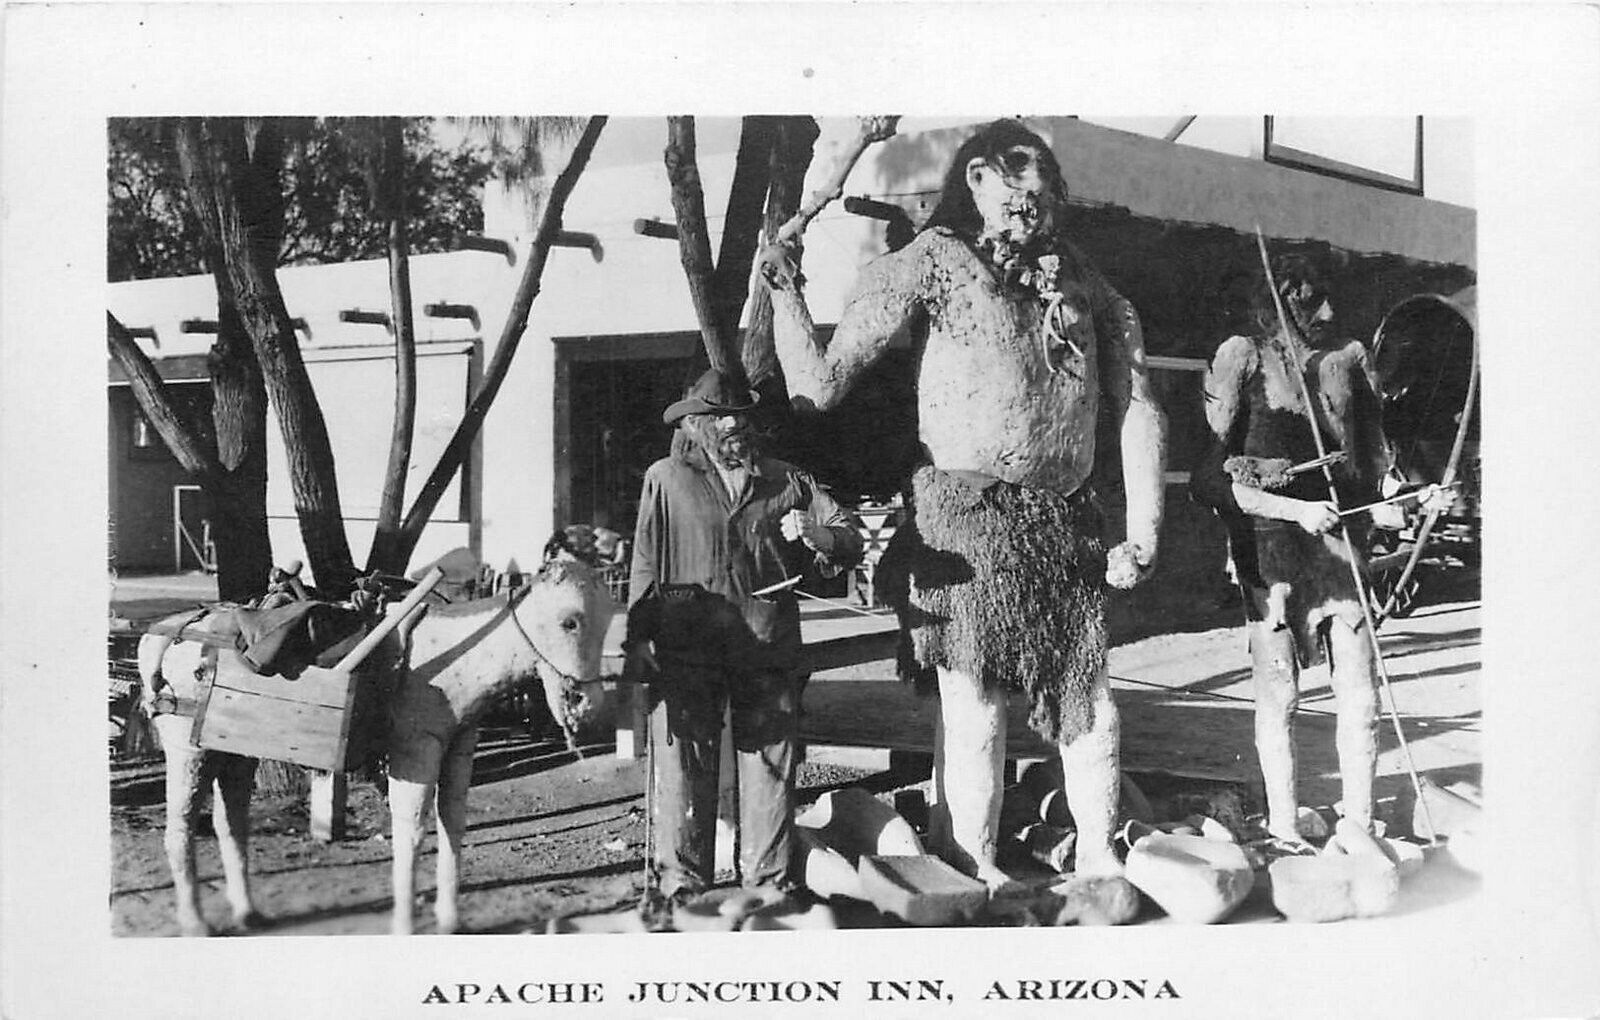 Postcard RPPC 1940s Arizona Apache Junction Inn Trading Post Cave mam AZ24-2123